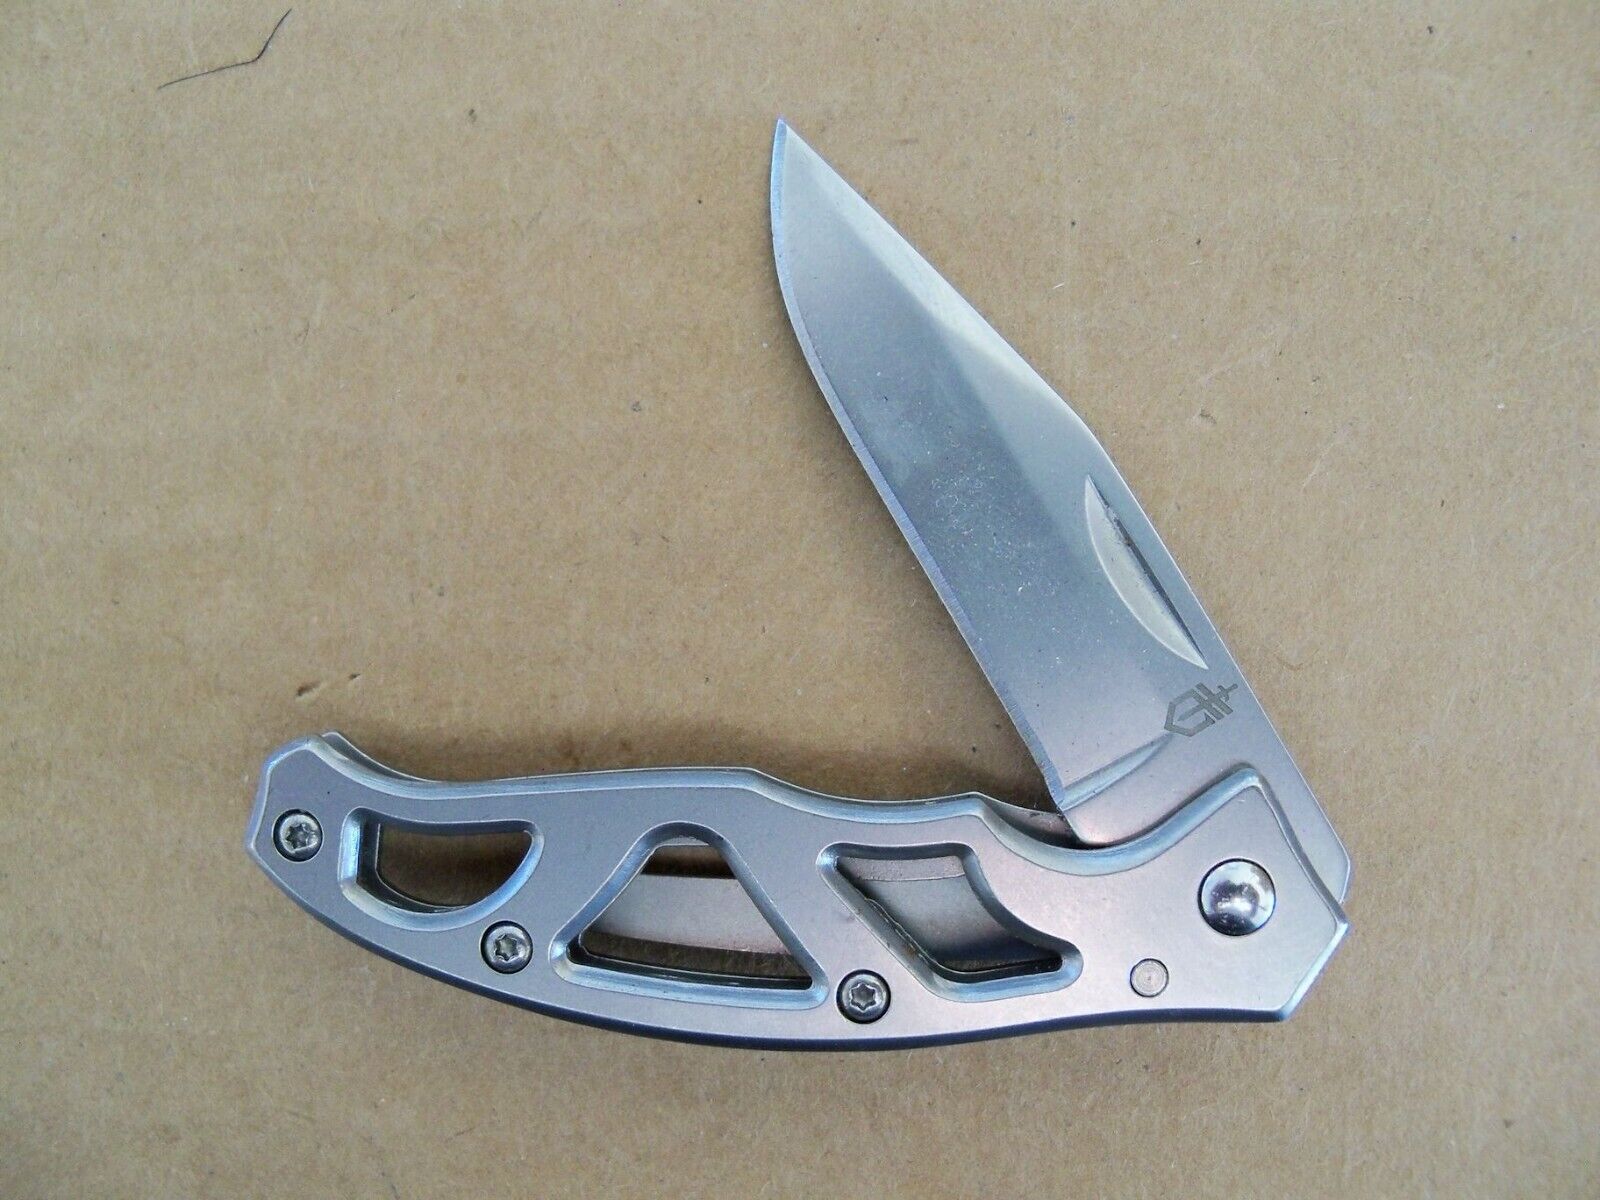 Gerber Paraframe Mini Folding Pocket Knife - Silver Plain Blade - Very Good